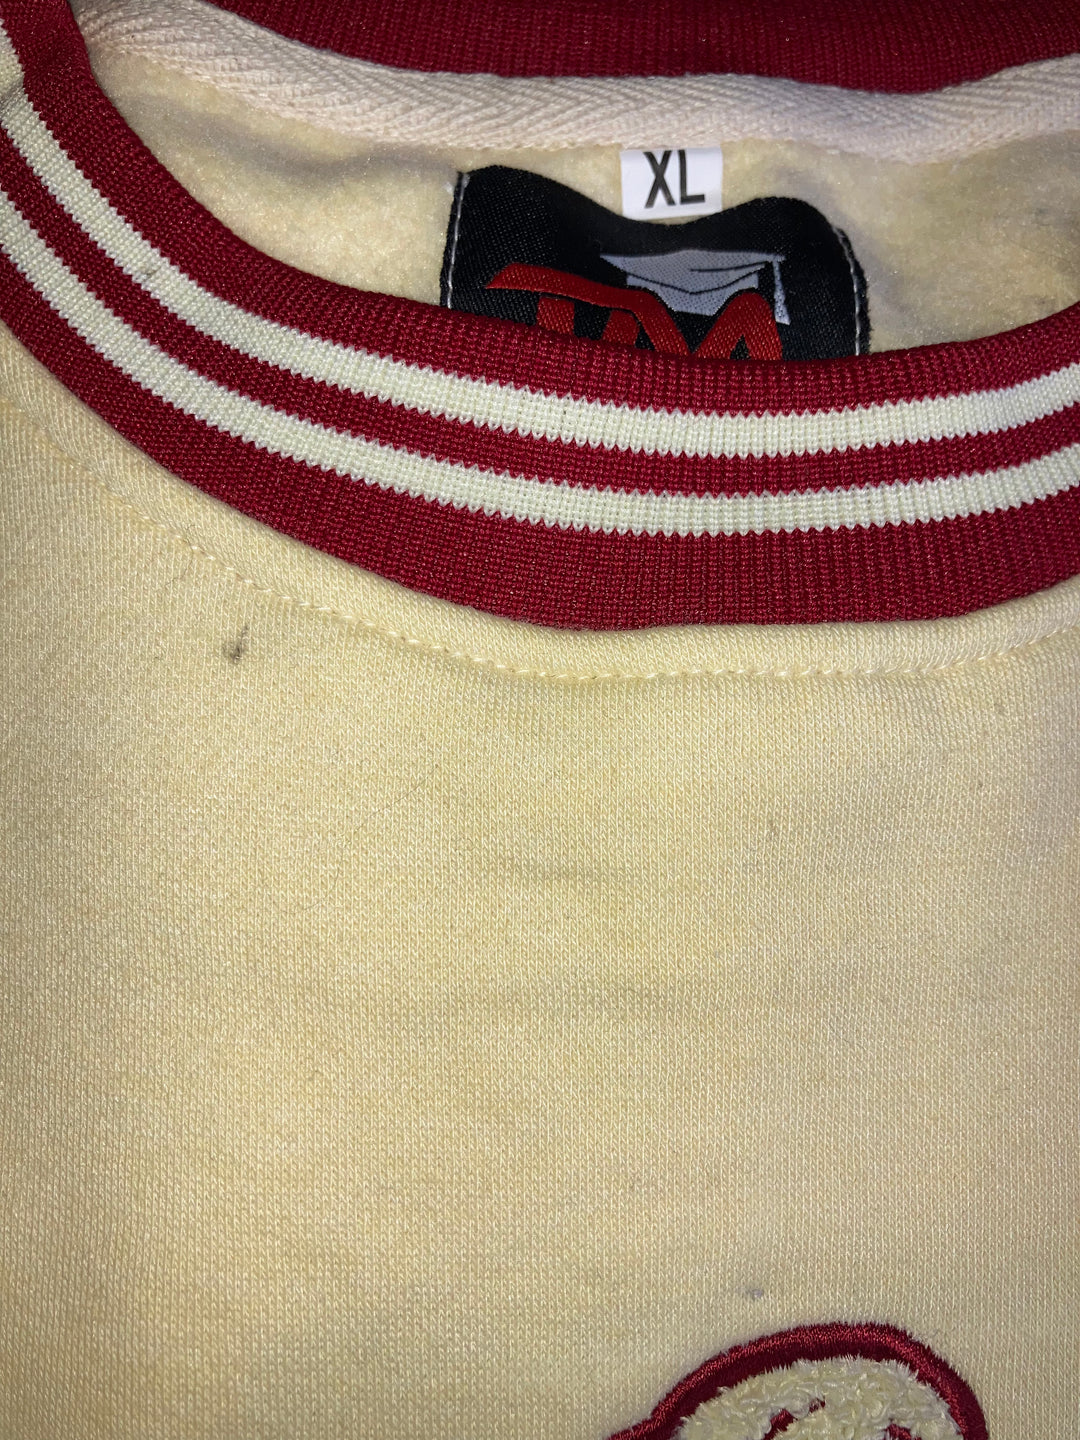 FINAL SALE: XL Delta Sigma Theta Chenille Crest Crimson and Cream Vinyl Leather Crewneck Sweatshirt (SEE PICS & DESCRIPTION for Details)